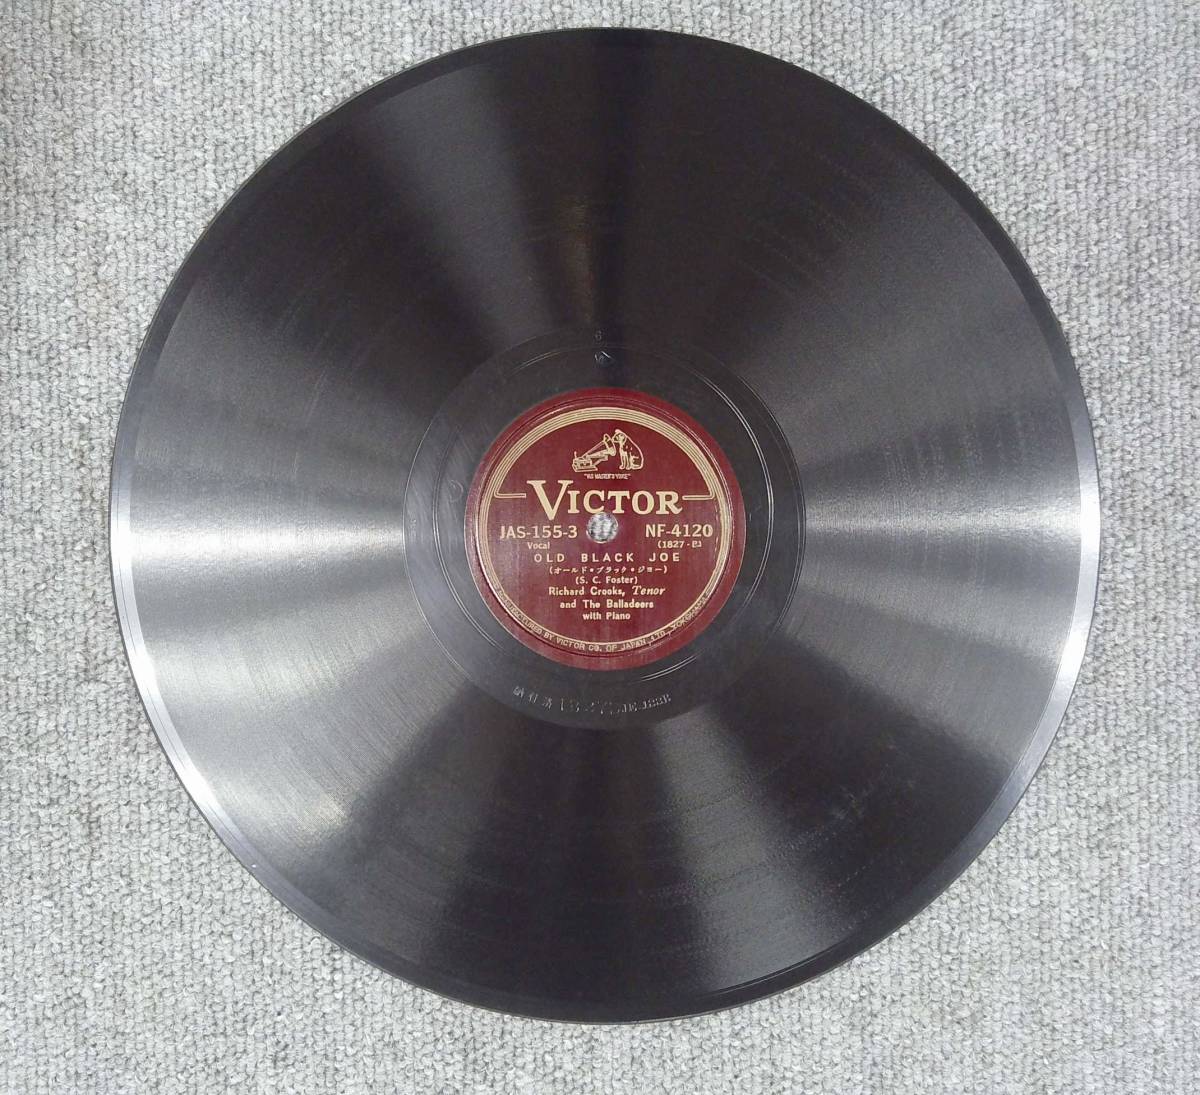 SP盤レコード Richard Crocks / 金髪のジェニー / OLD BLACK JOE Vocal NF-4120 ビクター ny30_画像4